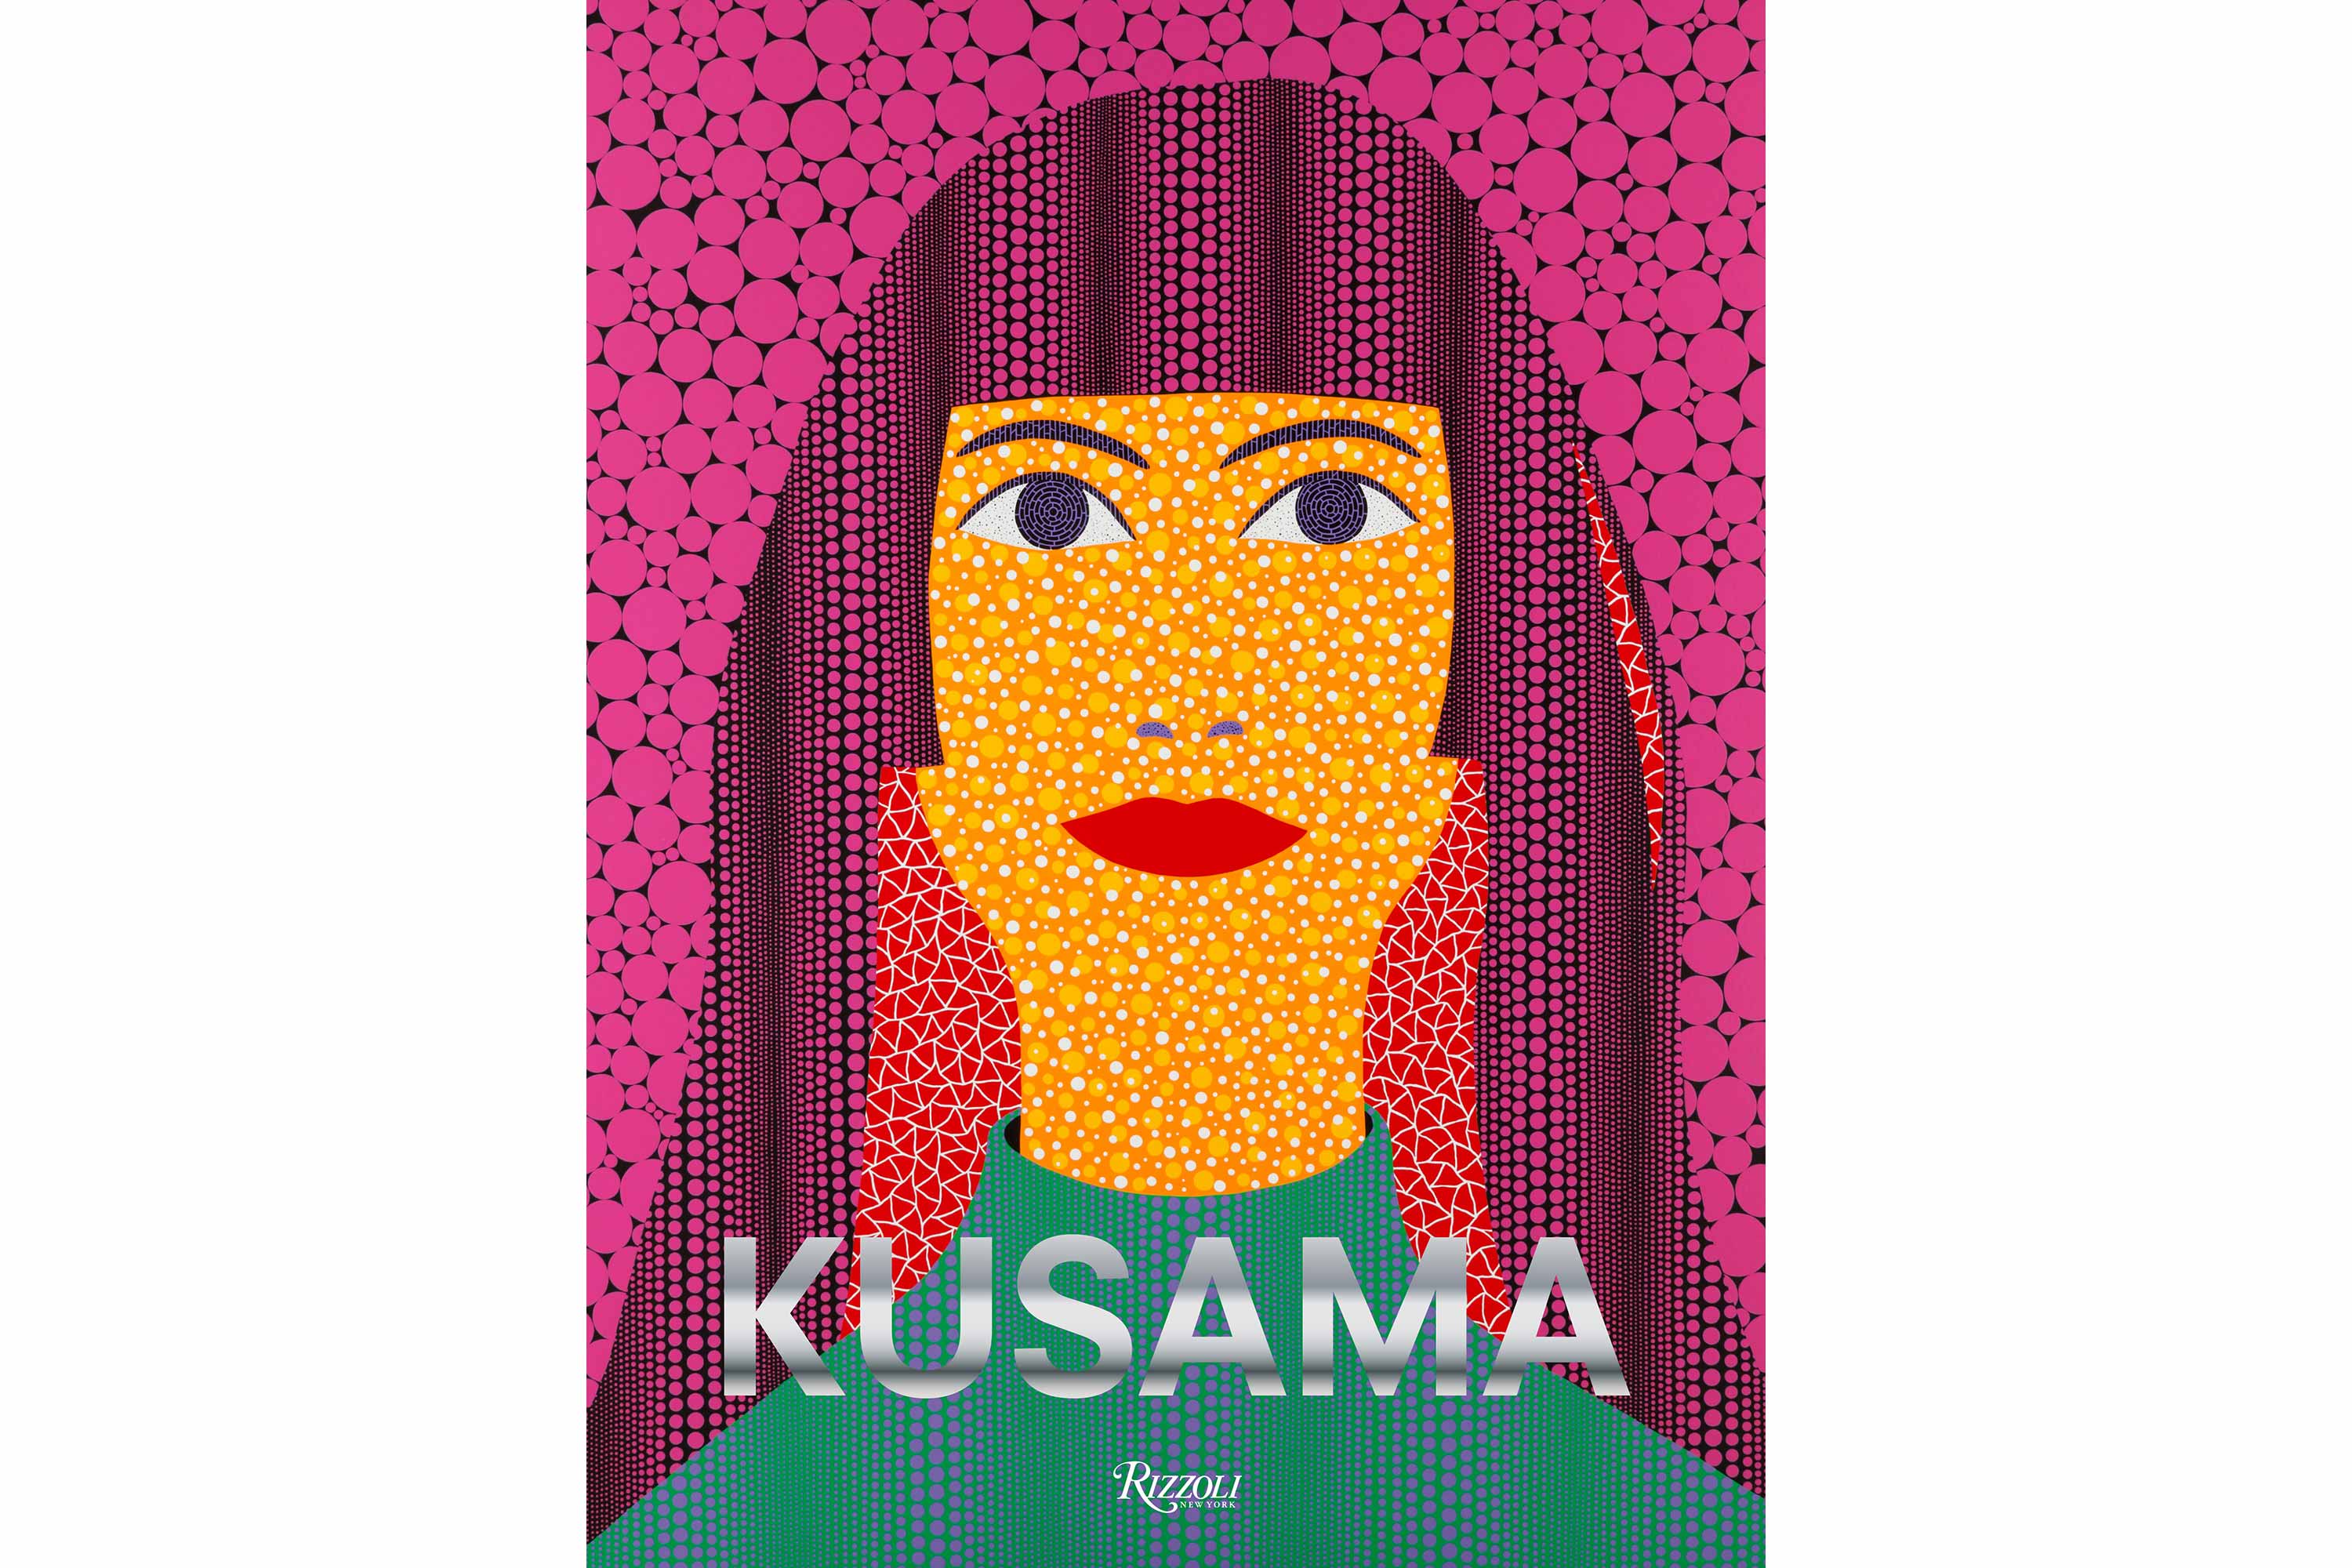 Explore the influence of Yayoi Kusama through the book 'Creating